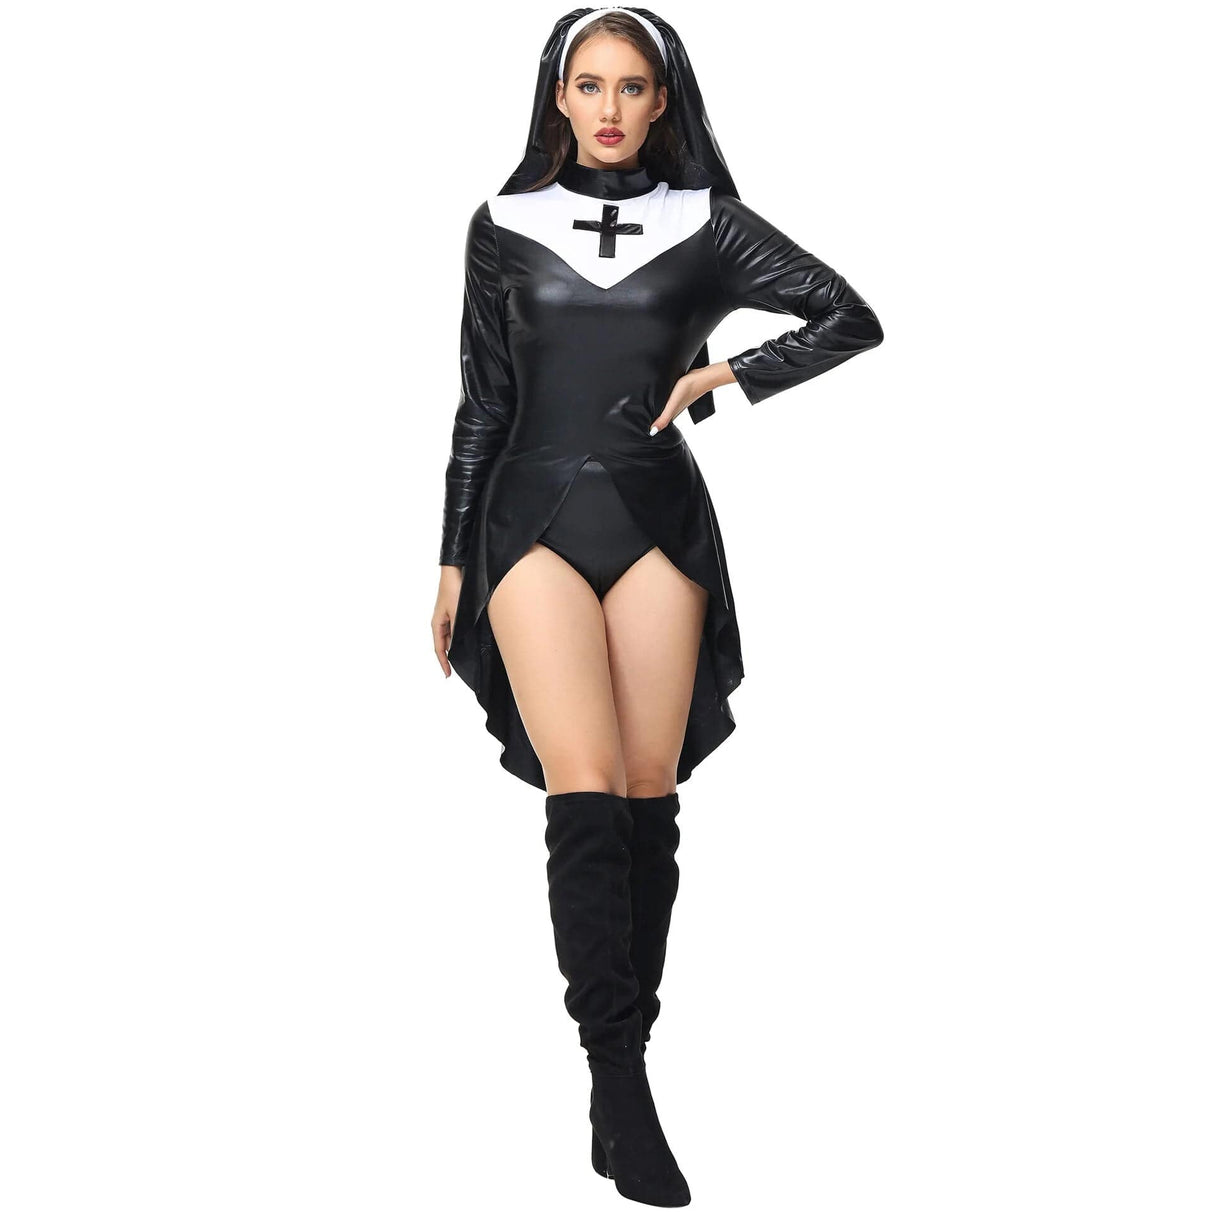 Alia Nun Sister Outfit